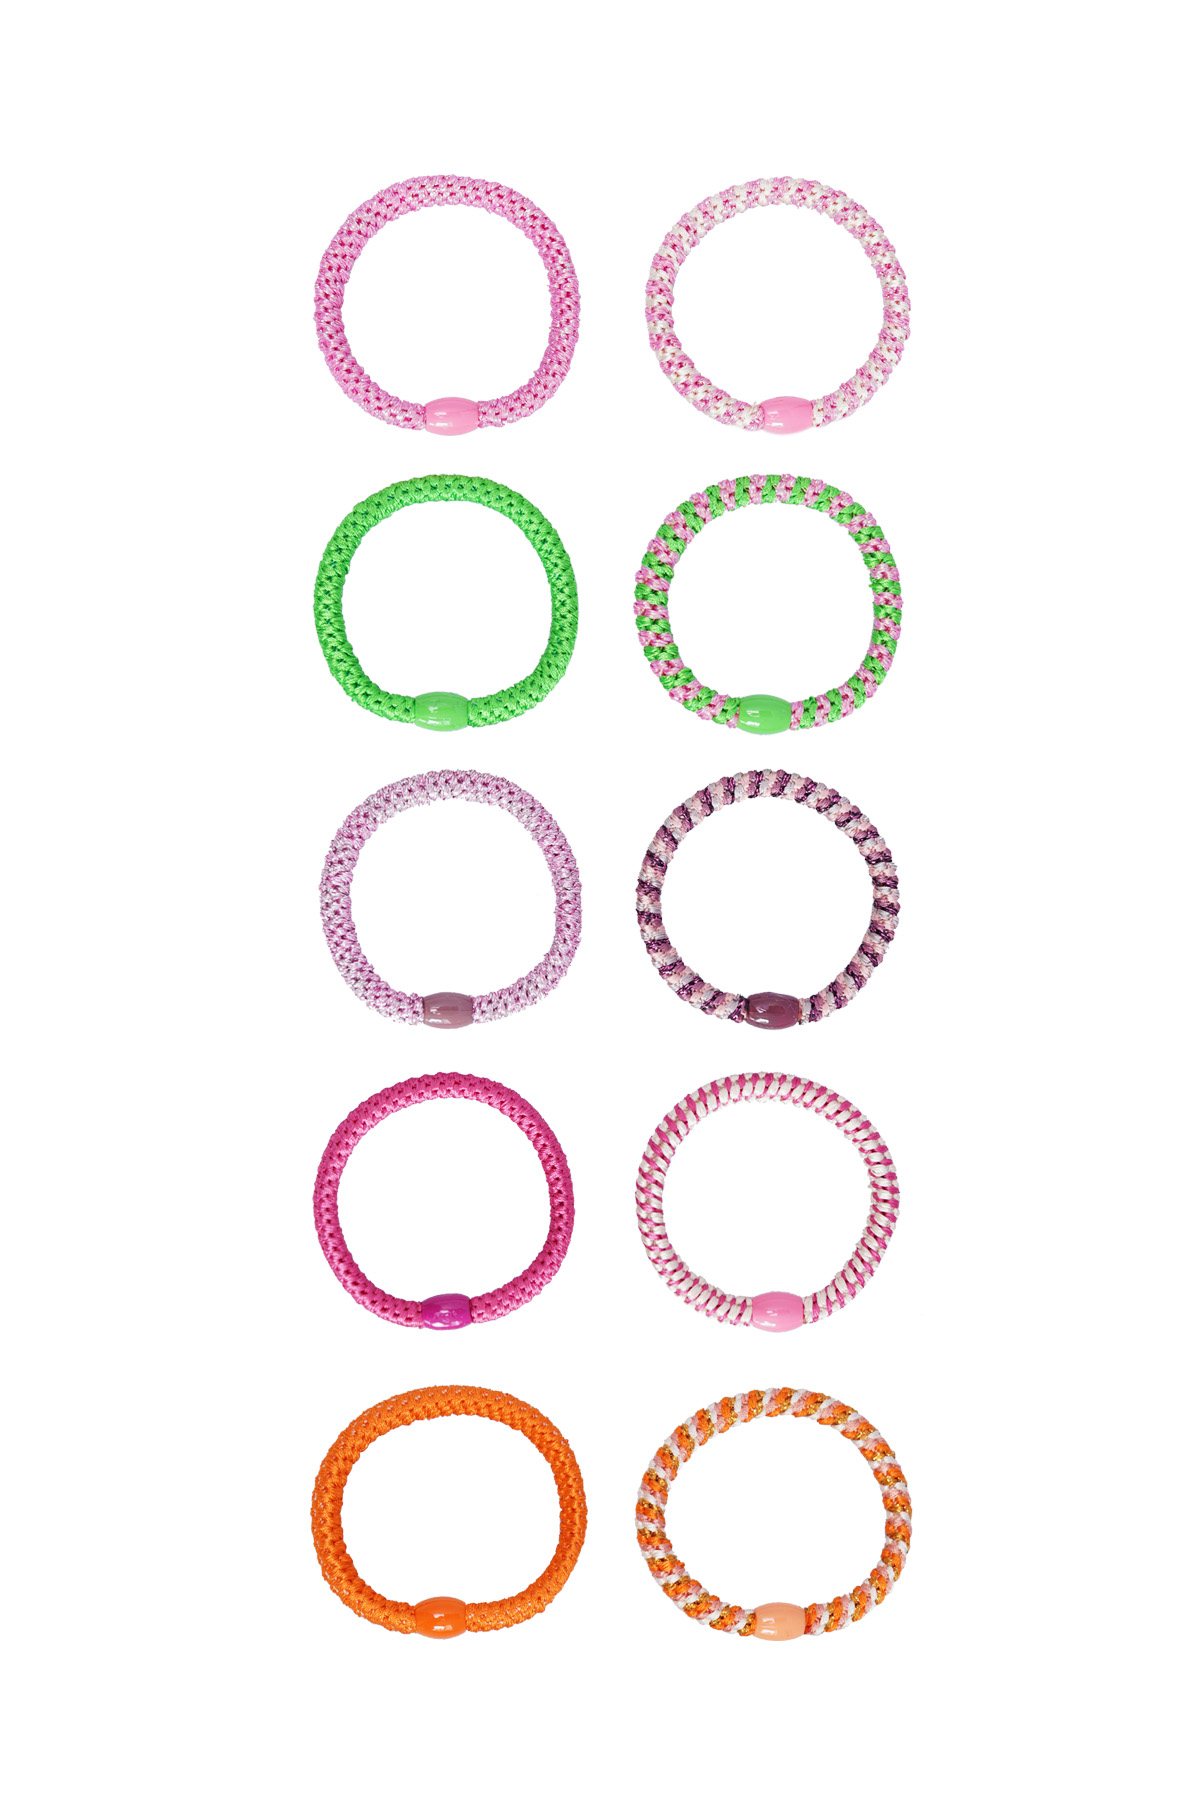 Set hair elastics / bracelet bright summer colors - polyester